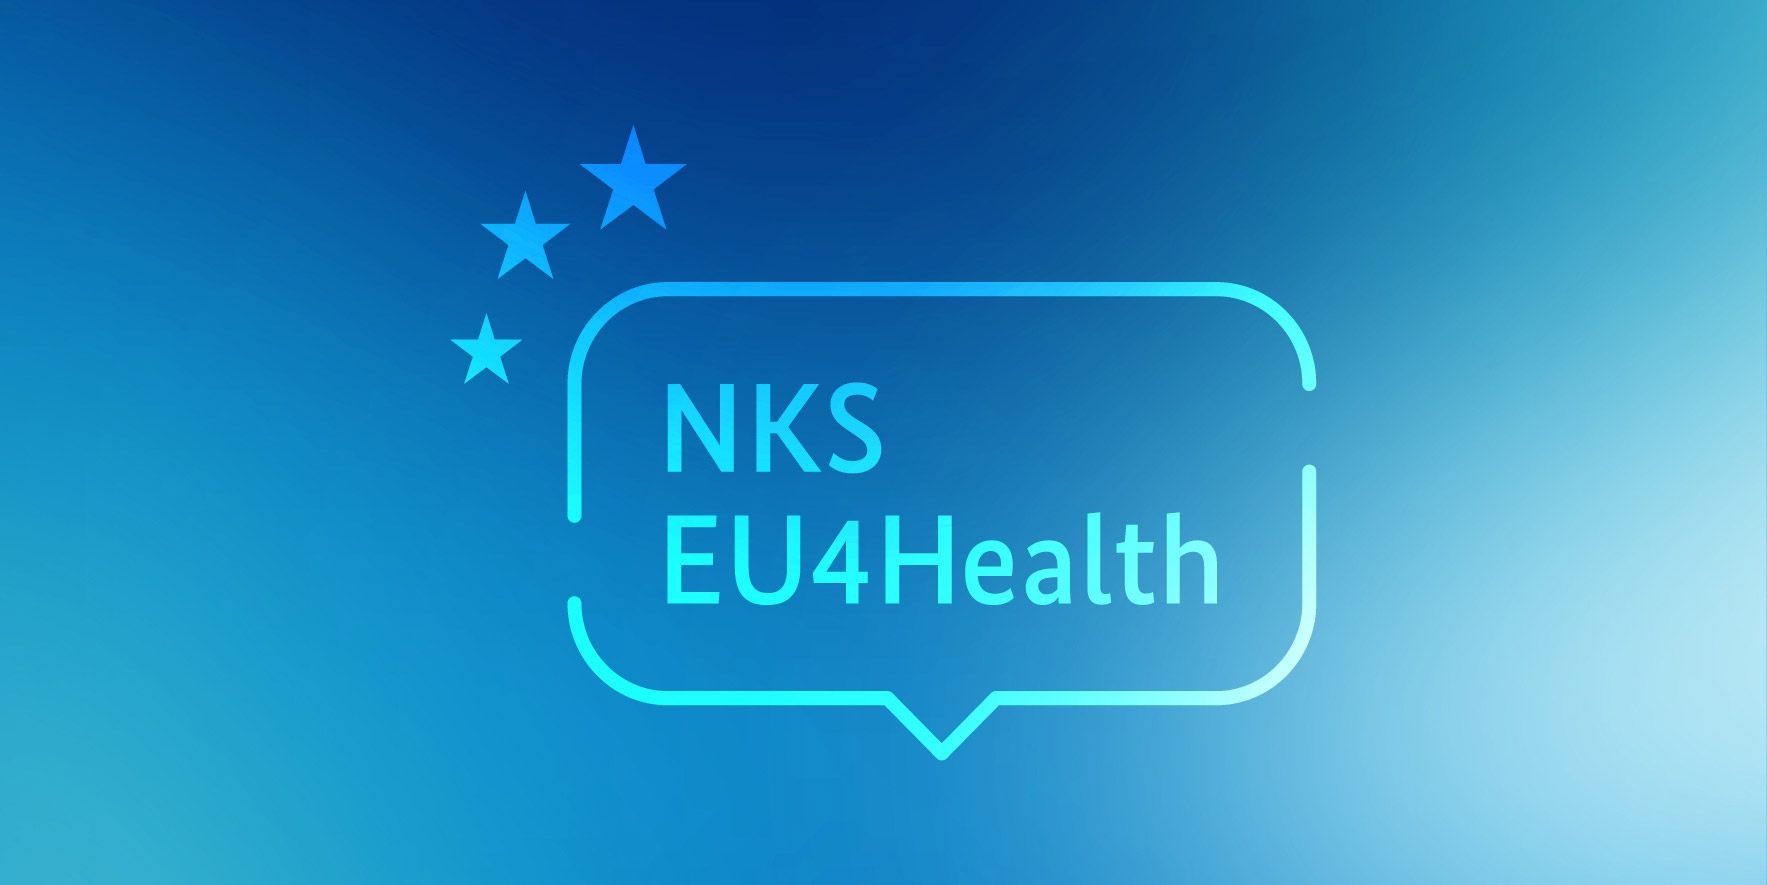 NKS EU4Health